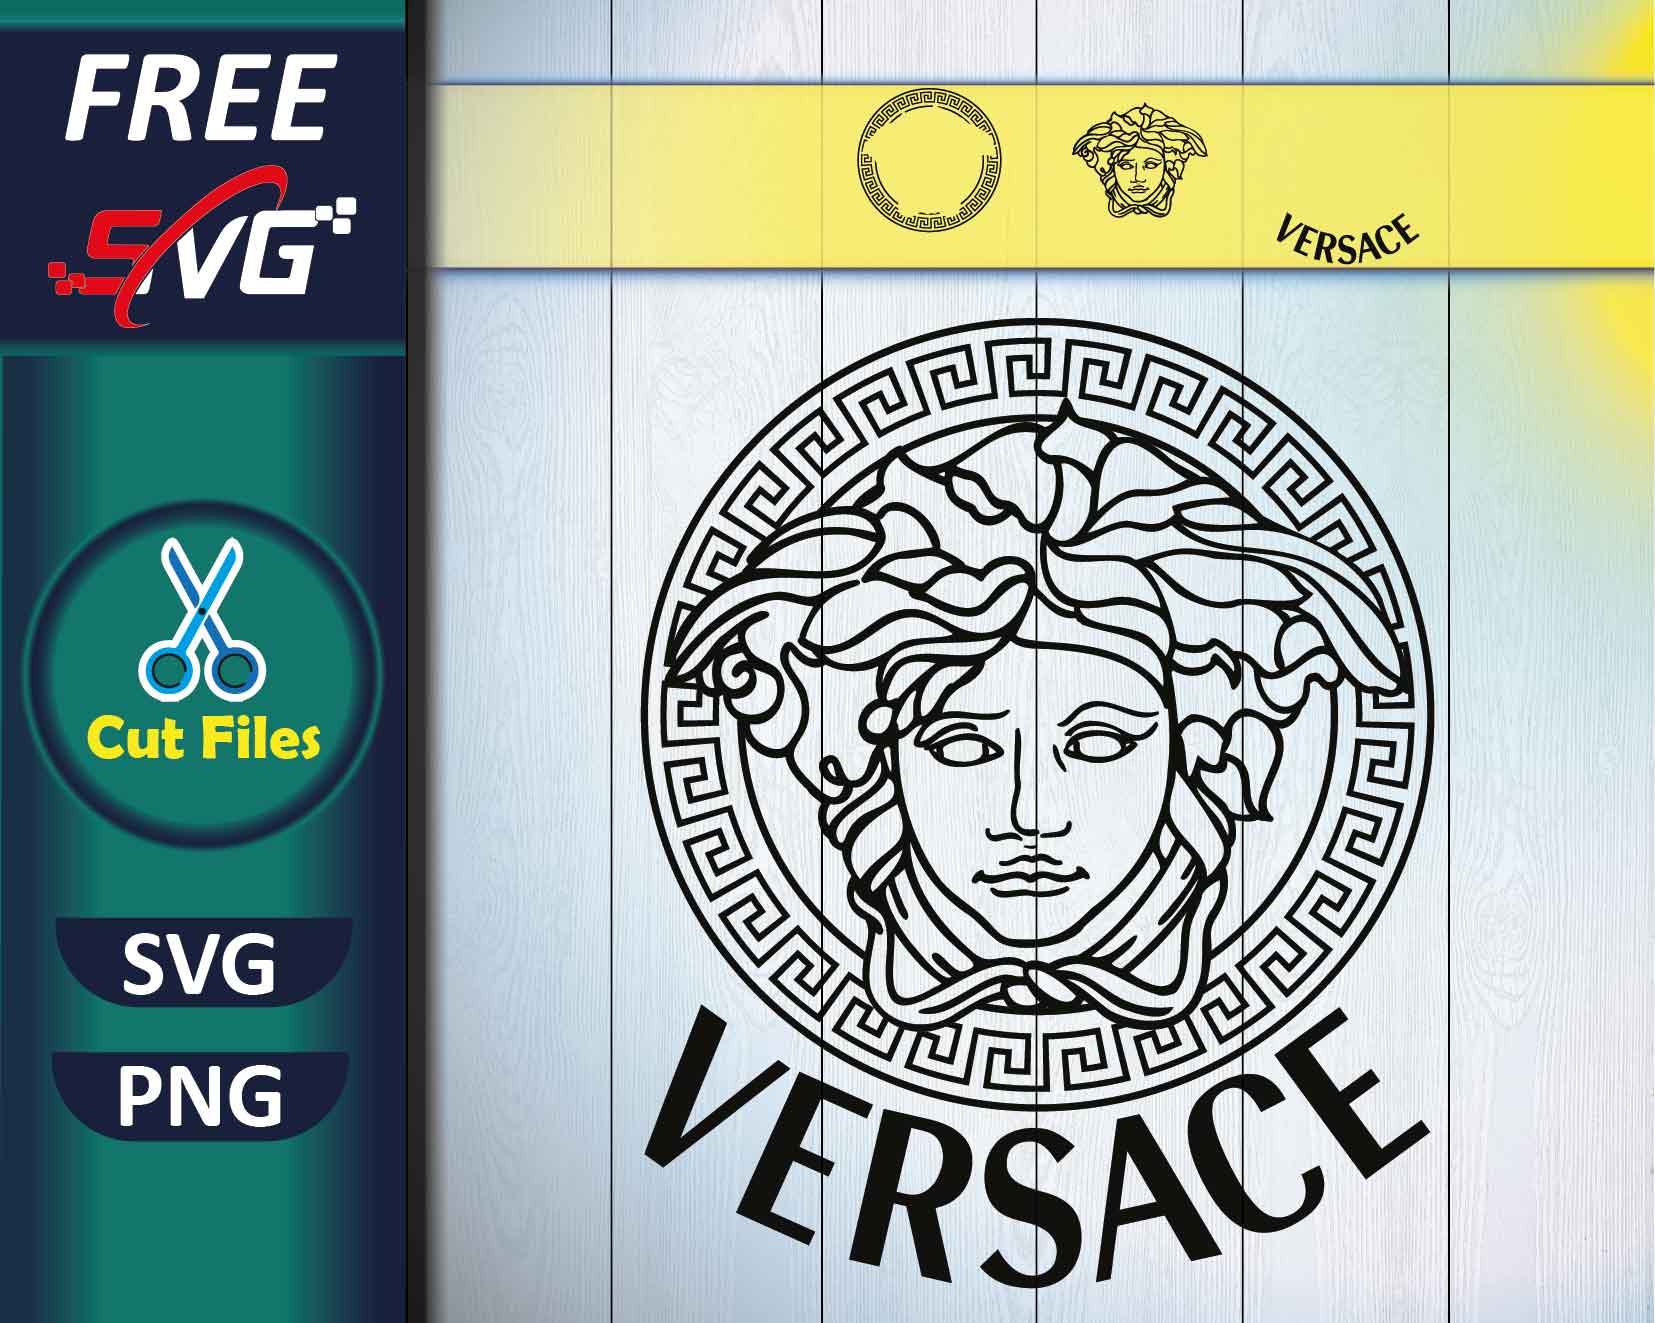 Versace SVG & PNG Download - Free SVG Download